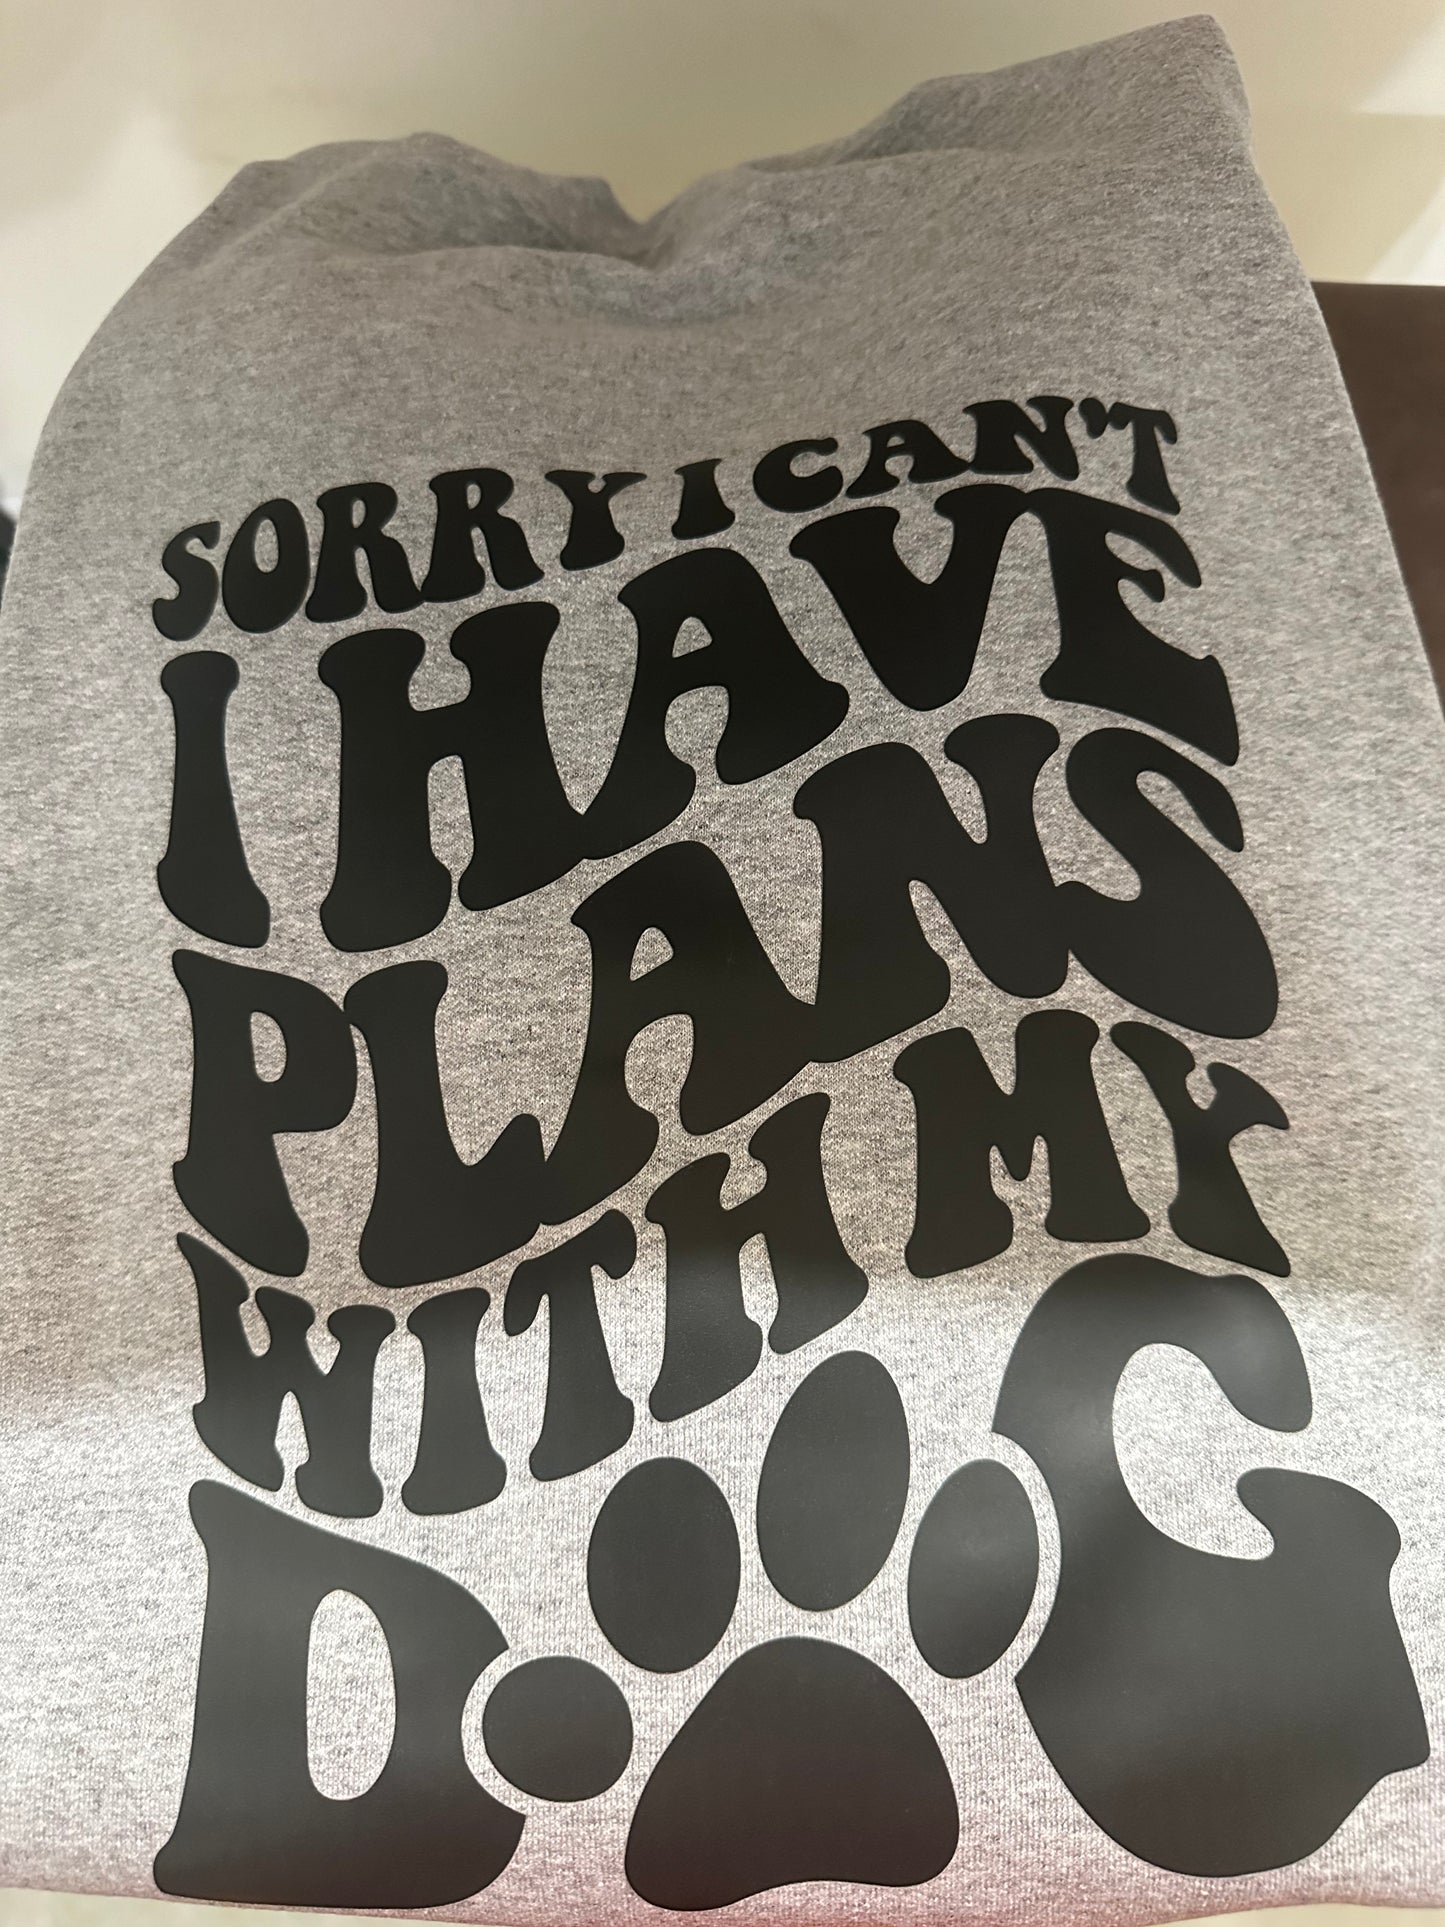 Plans with my dog crewneck